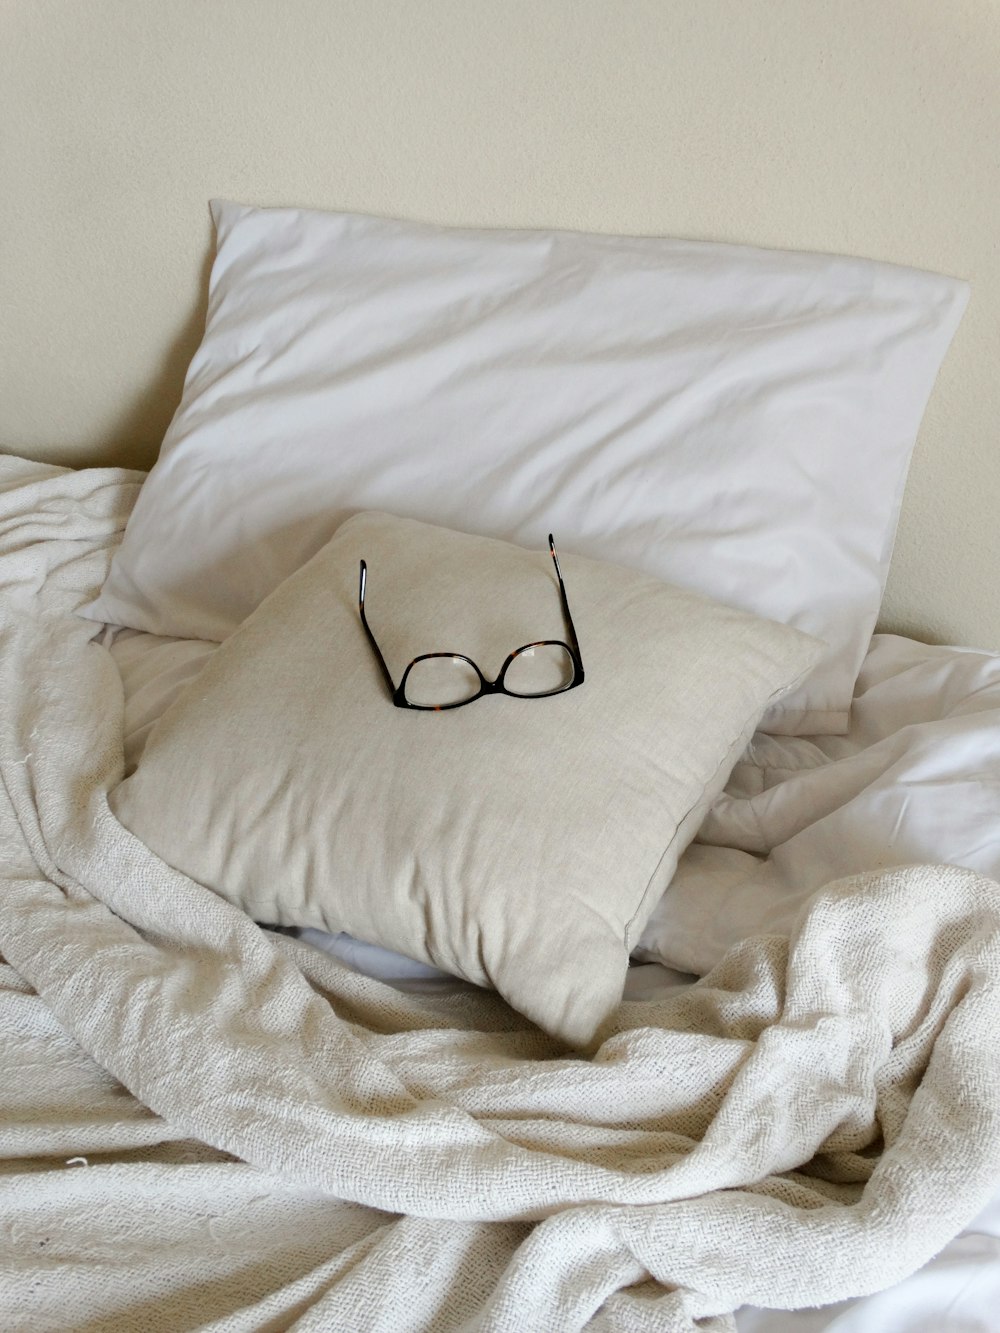 gafas de montura negra sobre almohada blanca